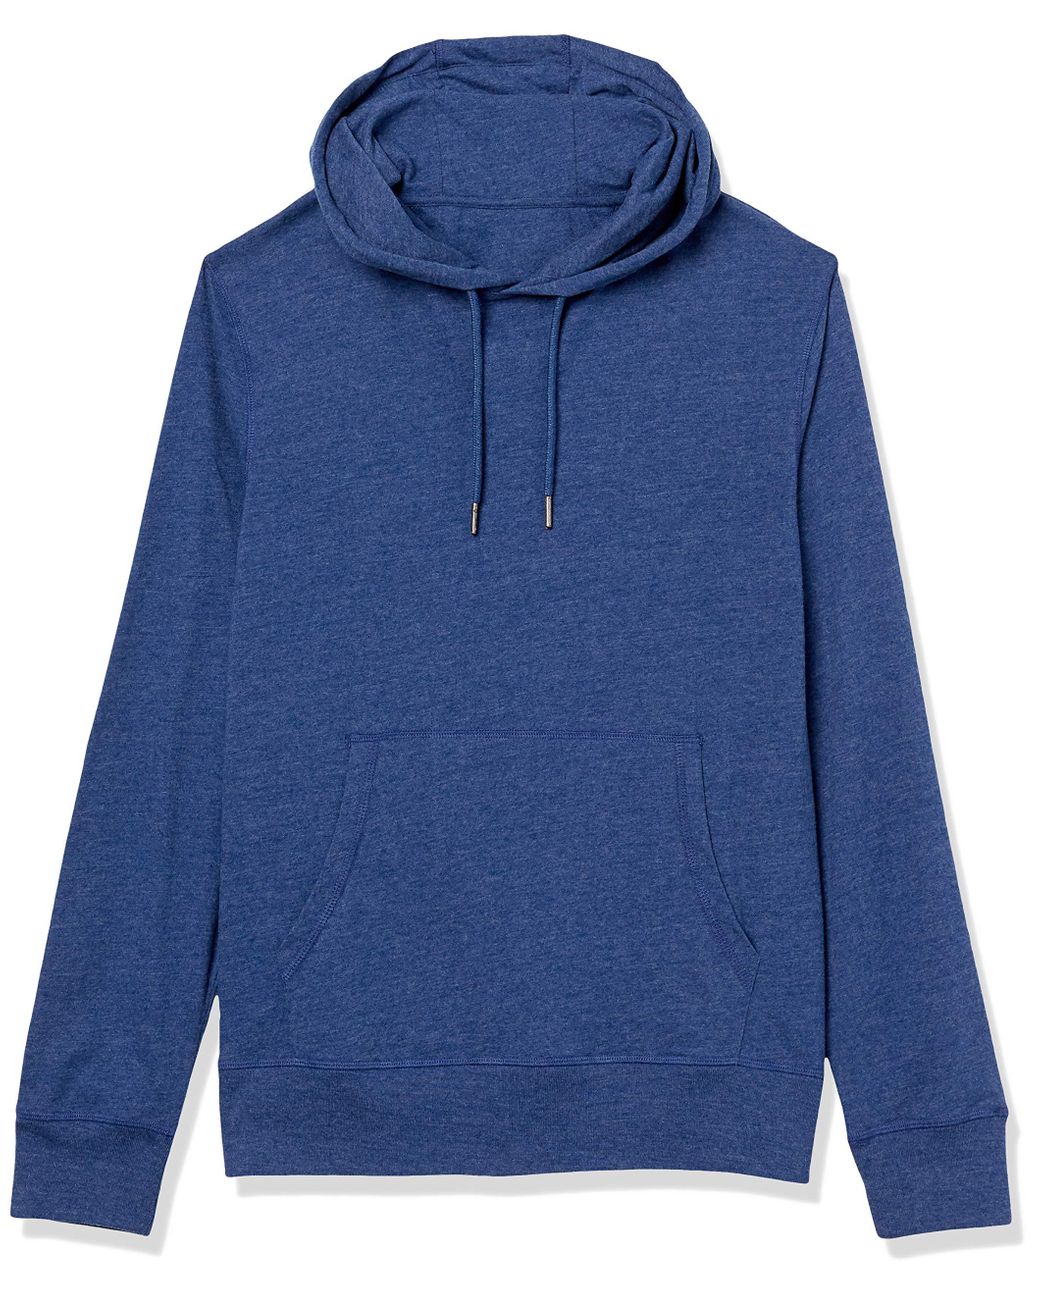 Amazon Essentials Lightweight Jersey Pullover Hoodie in Blue Heather (Blue)  for Men - Lyst